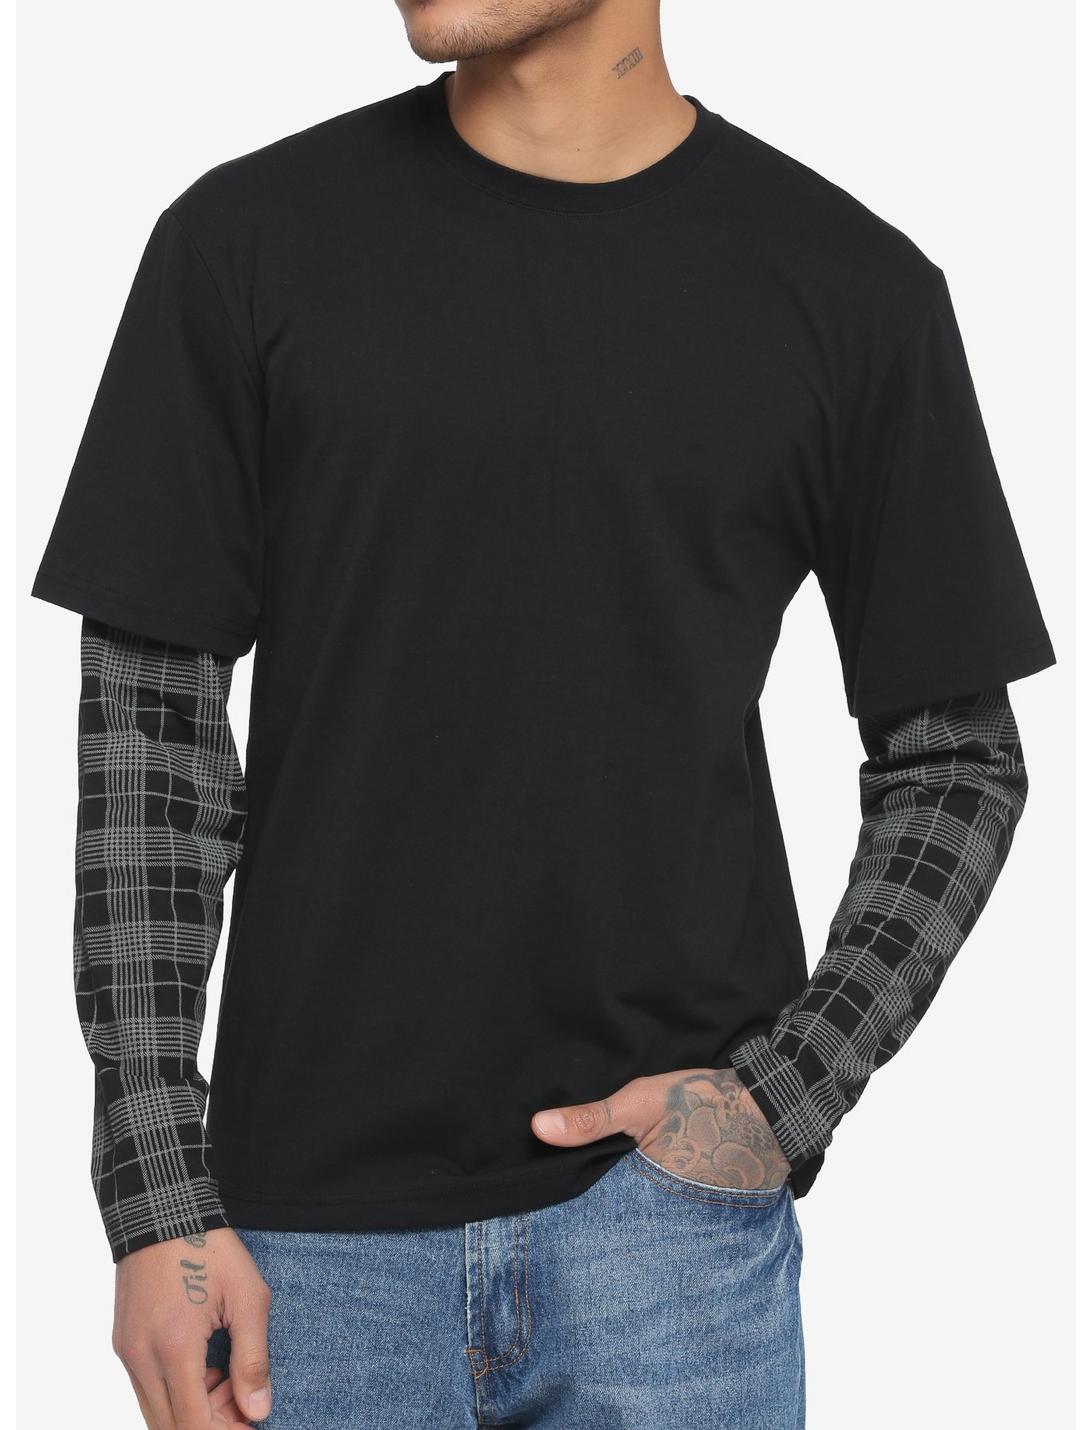 Black & Grey Plaid Sleeve Twofer Long-Sleeve T-Shirt, BLACK, hi-res